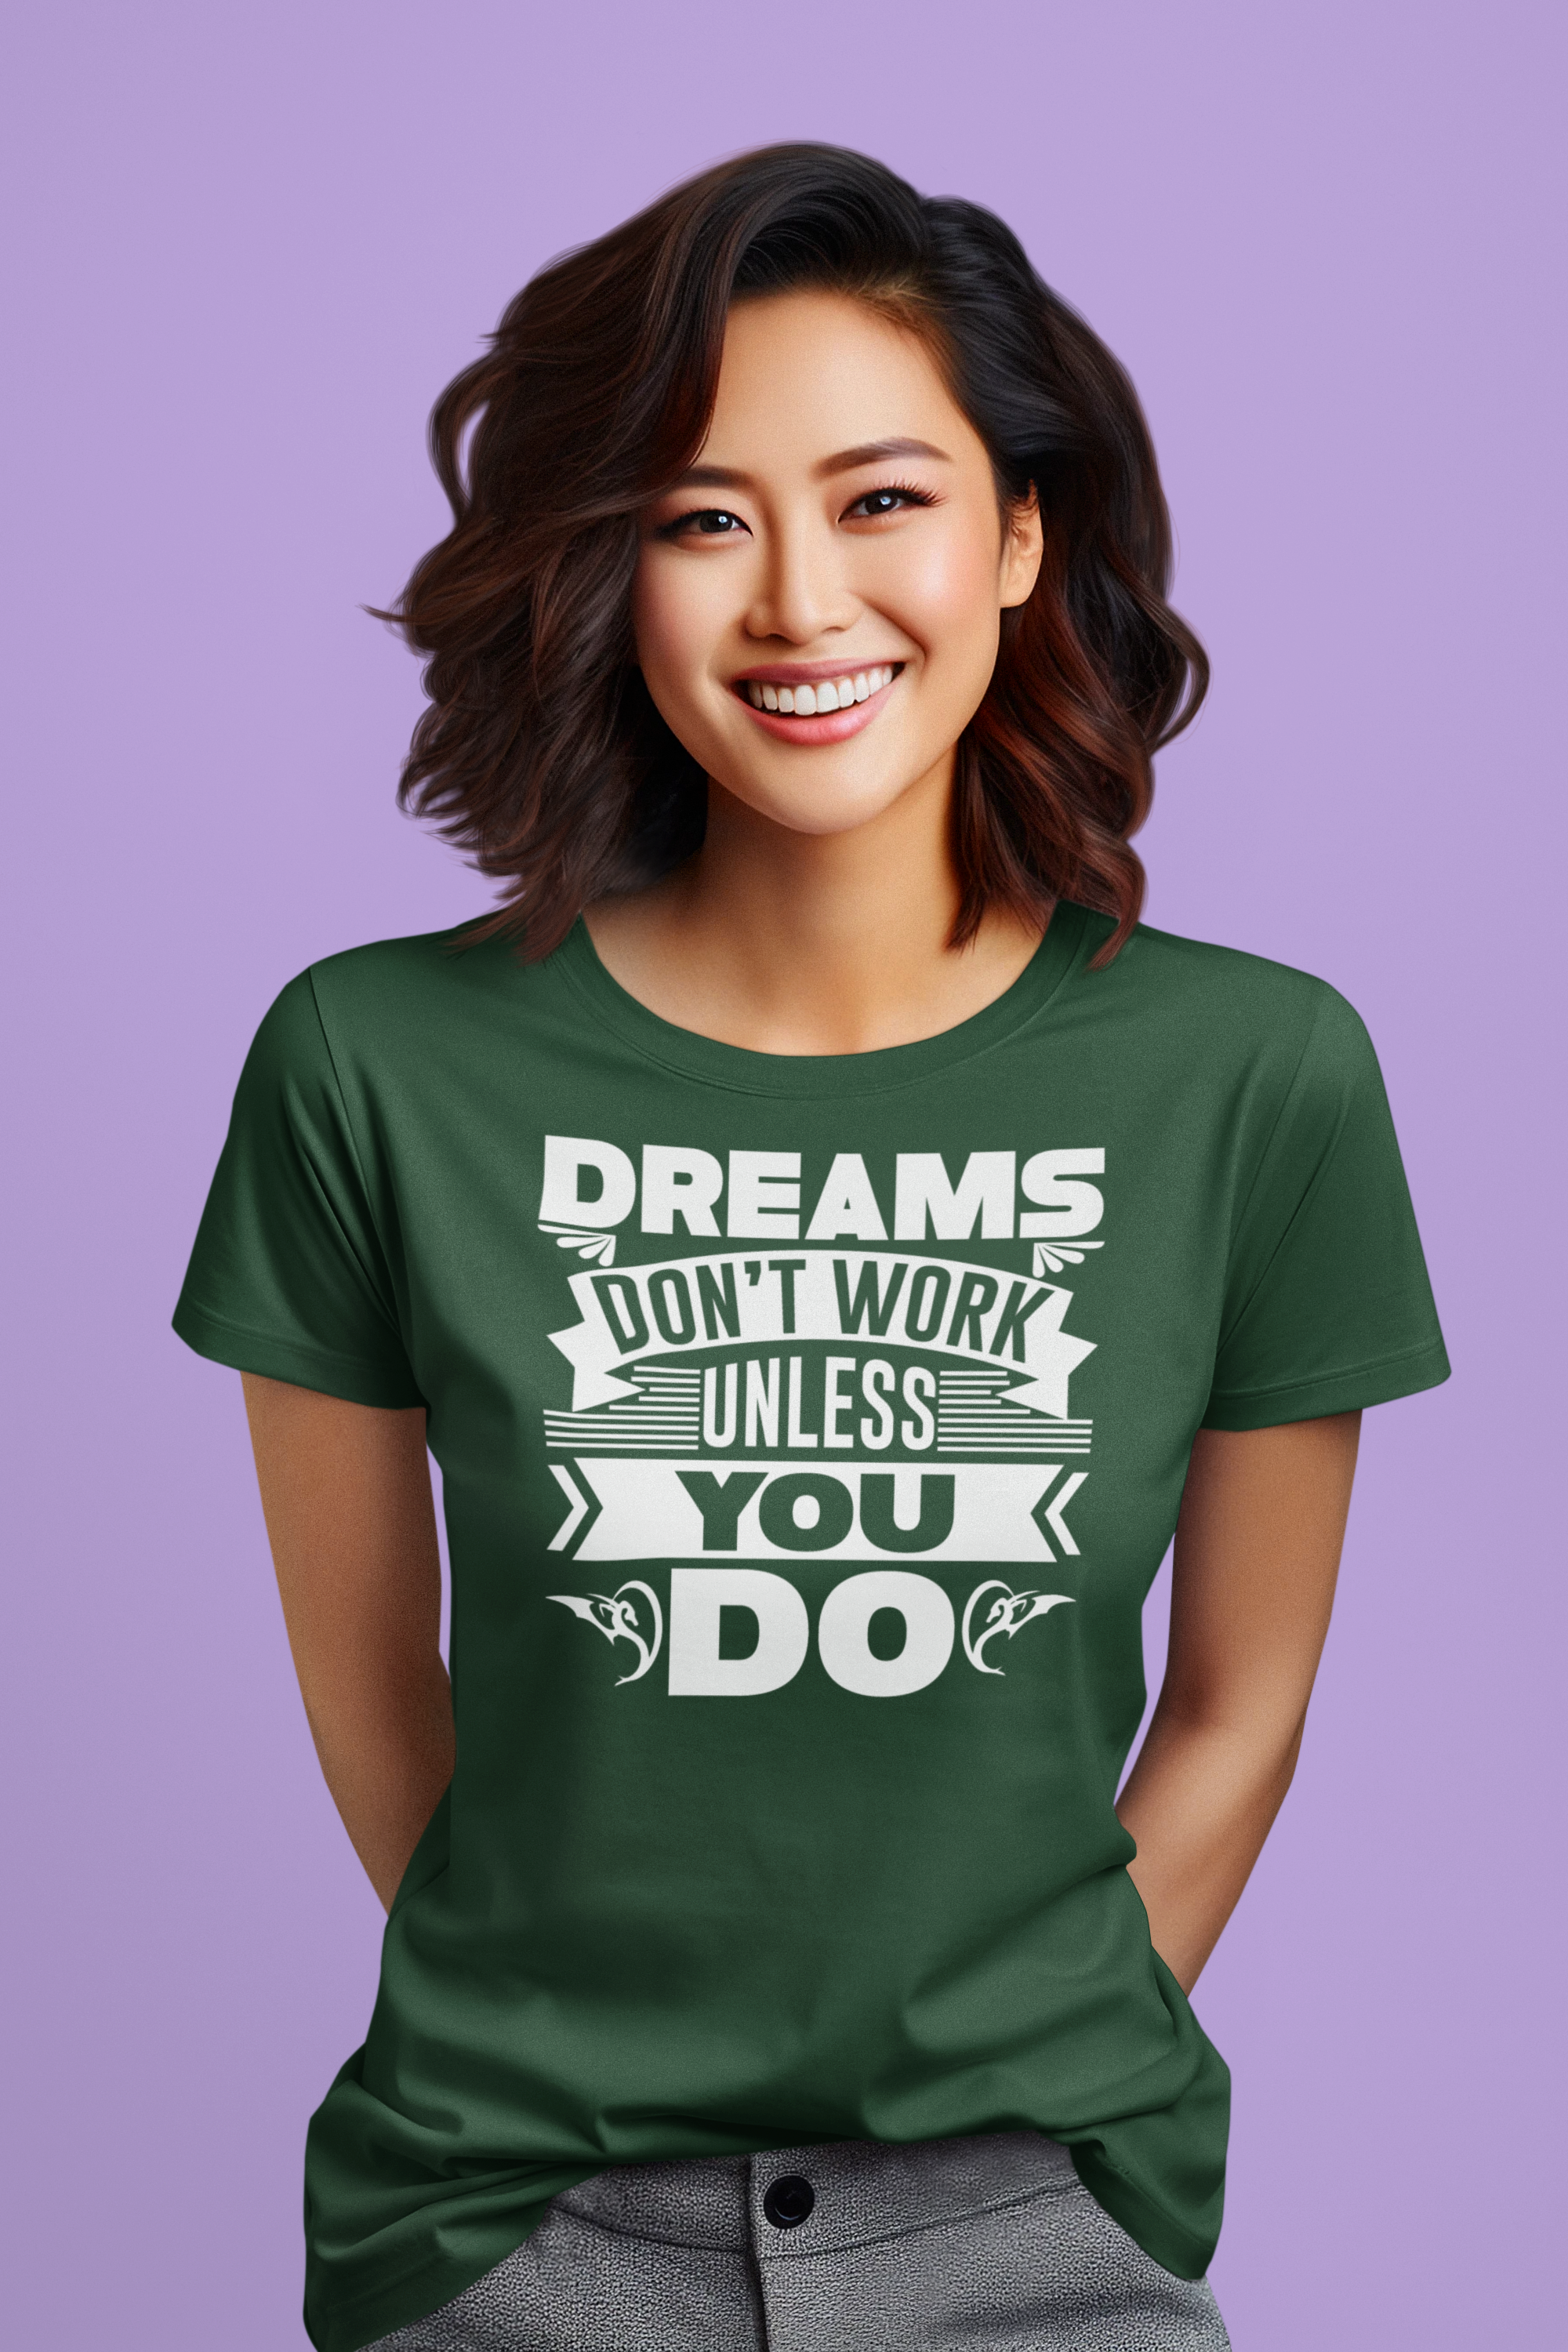 Dreams Don't Work Unless You Do - Women's Inspirational t-shirt